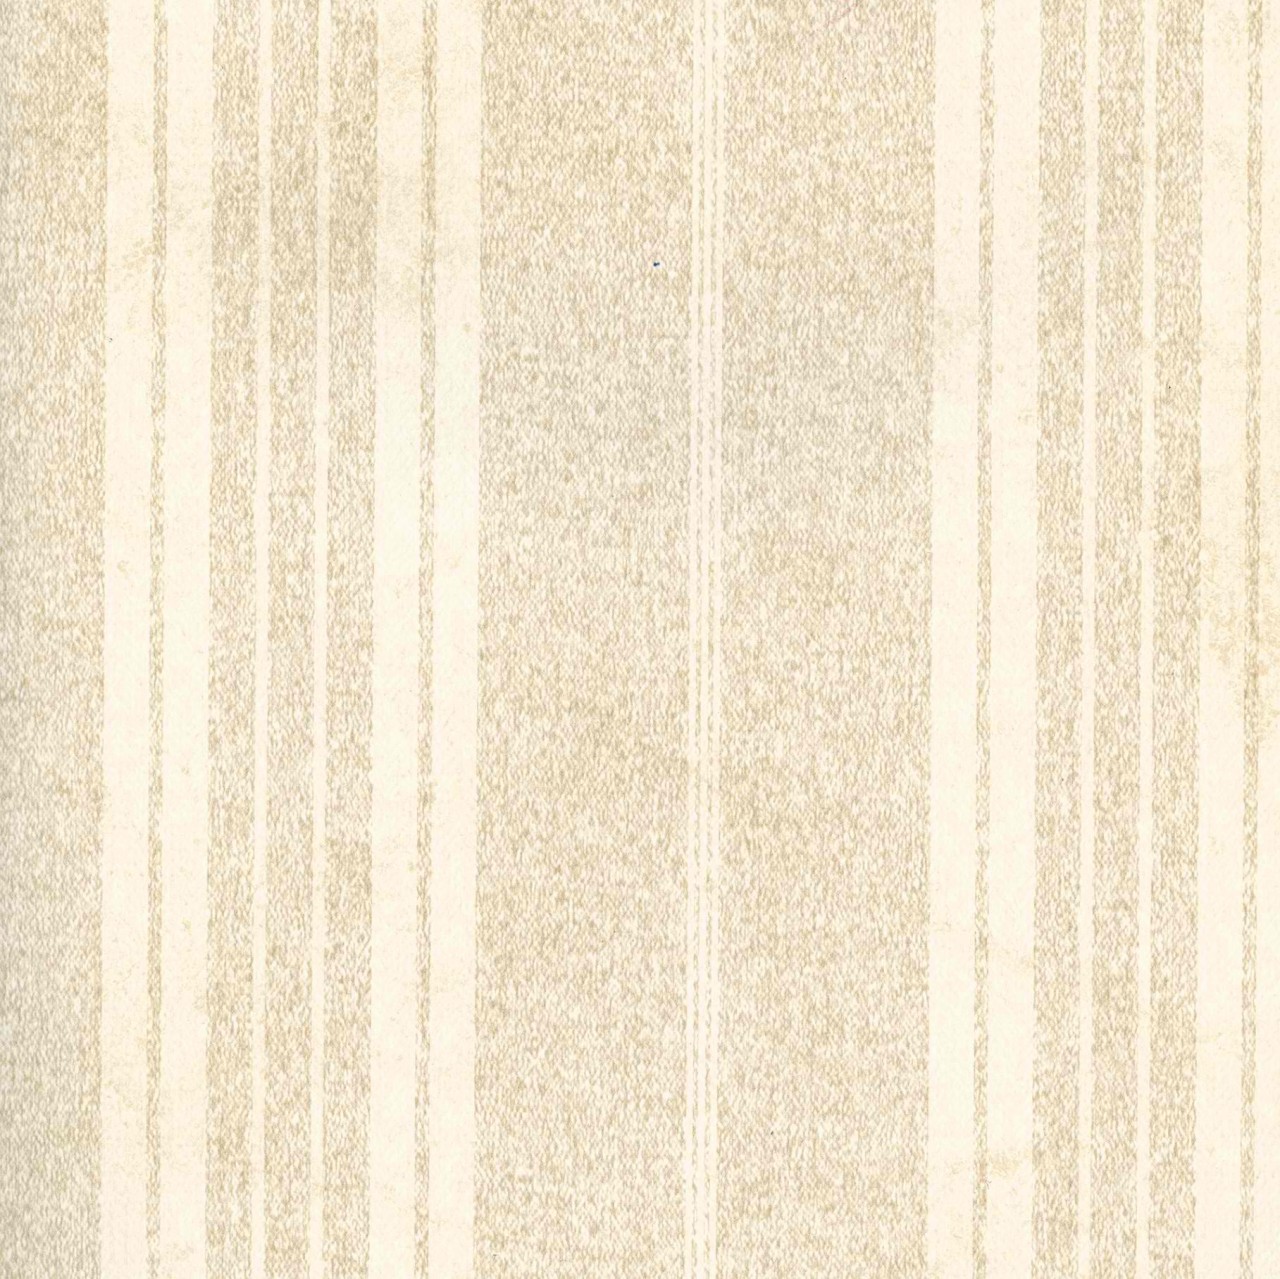 Cream Beige Cg66312 Farmhouse Stripe Wallpaper Kitchen Bathroom